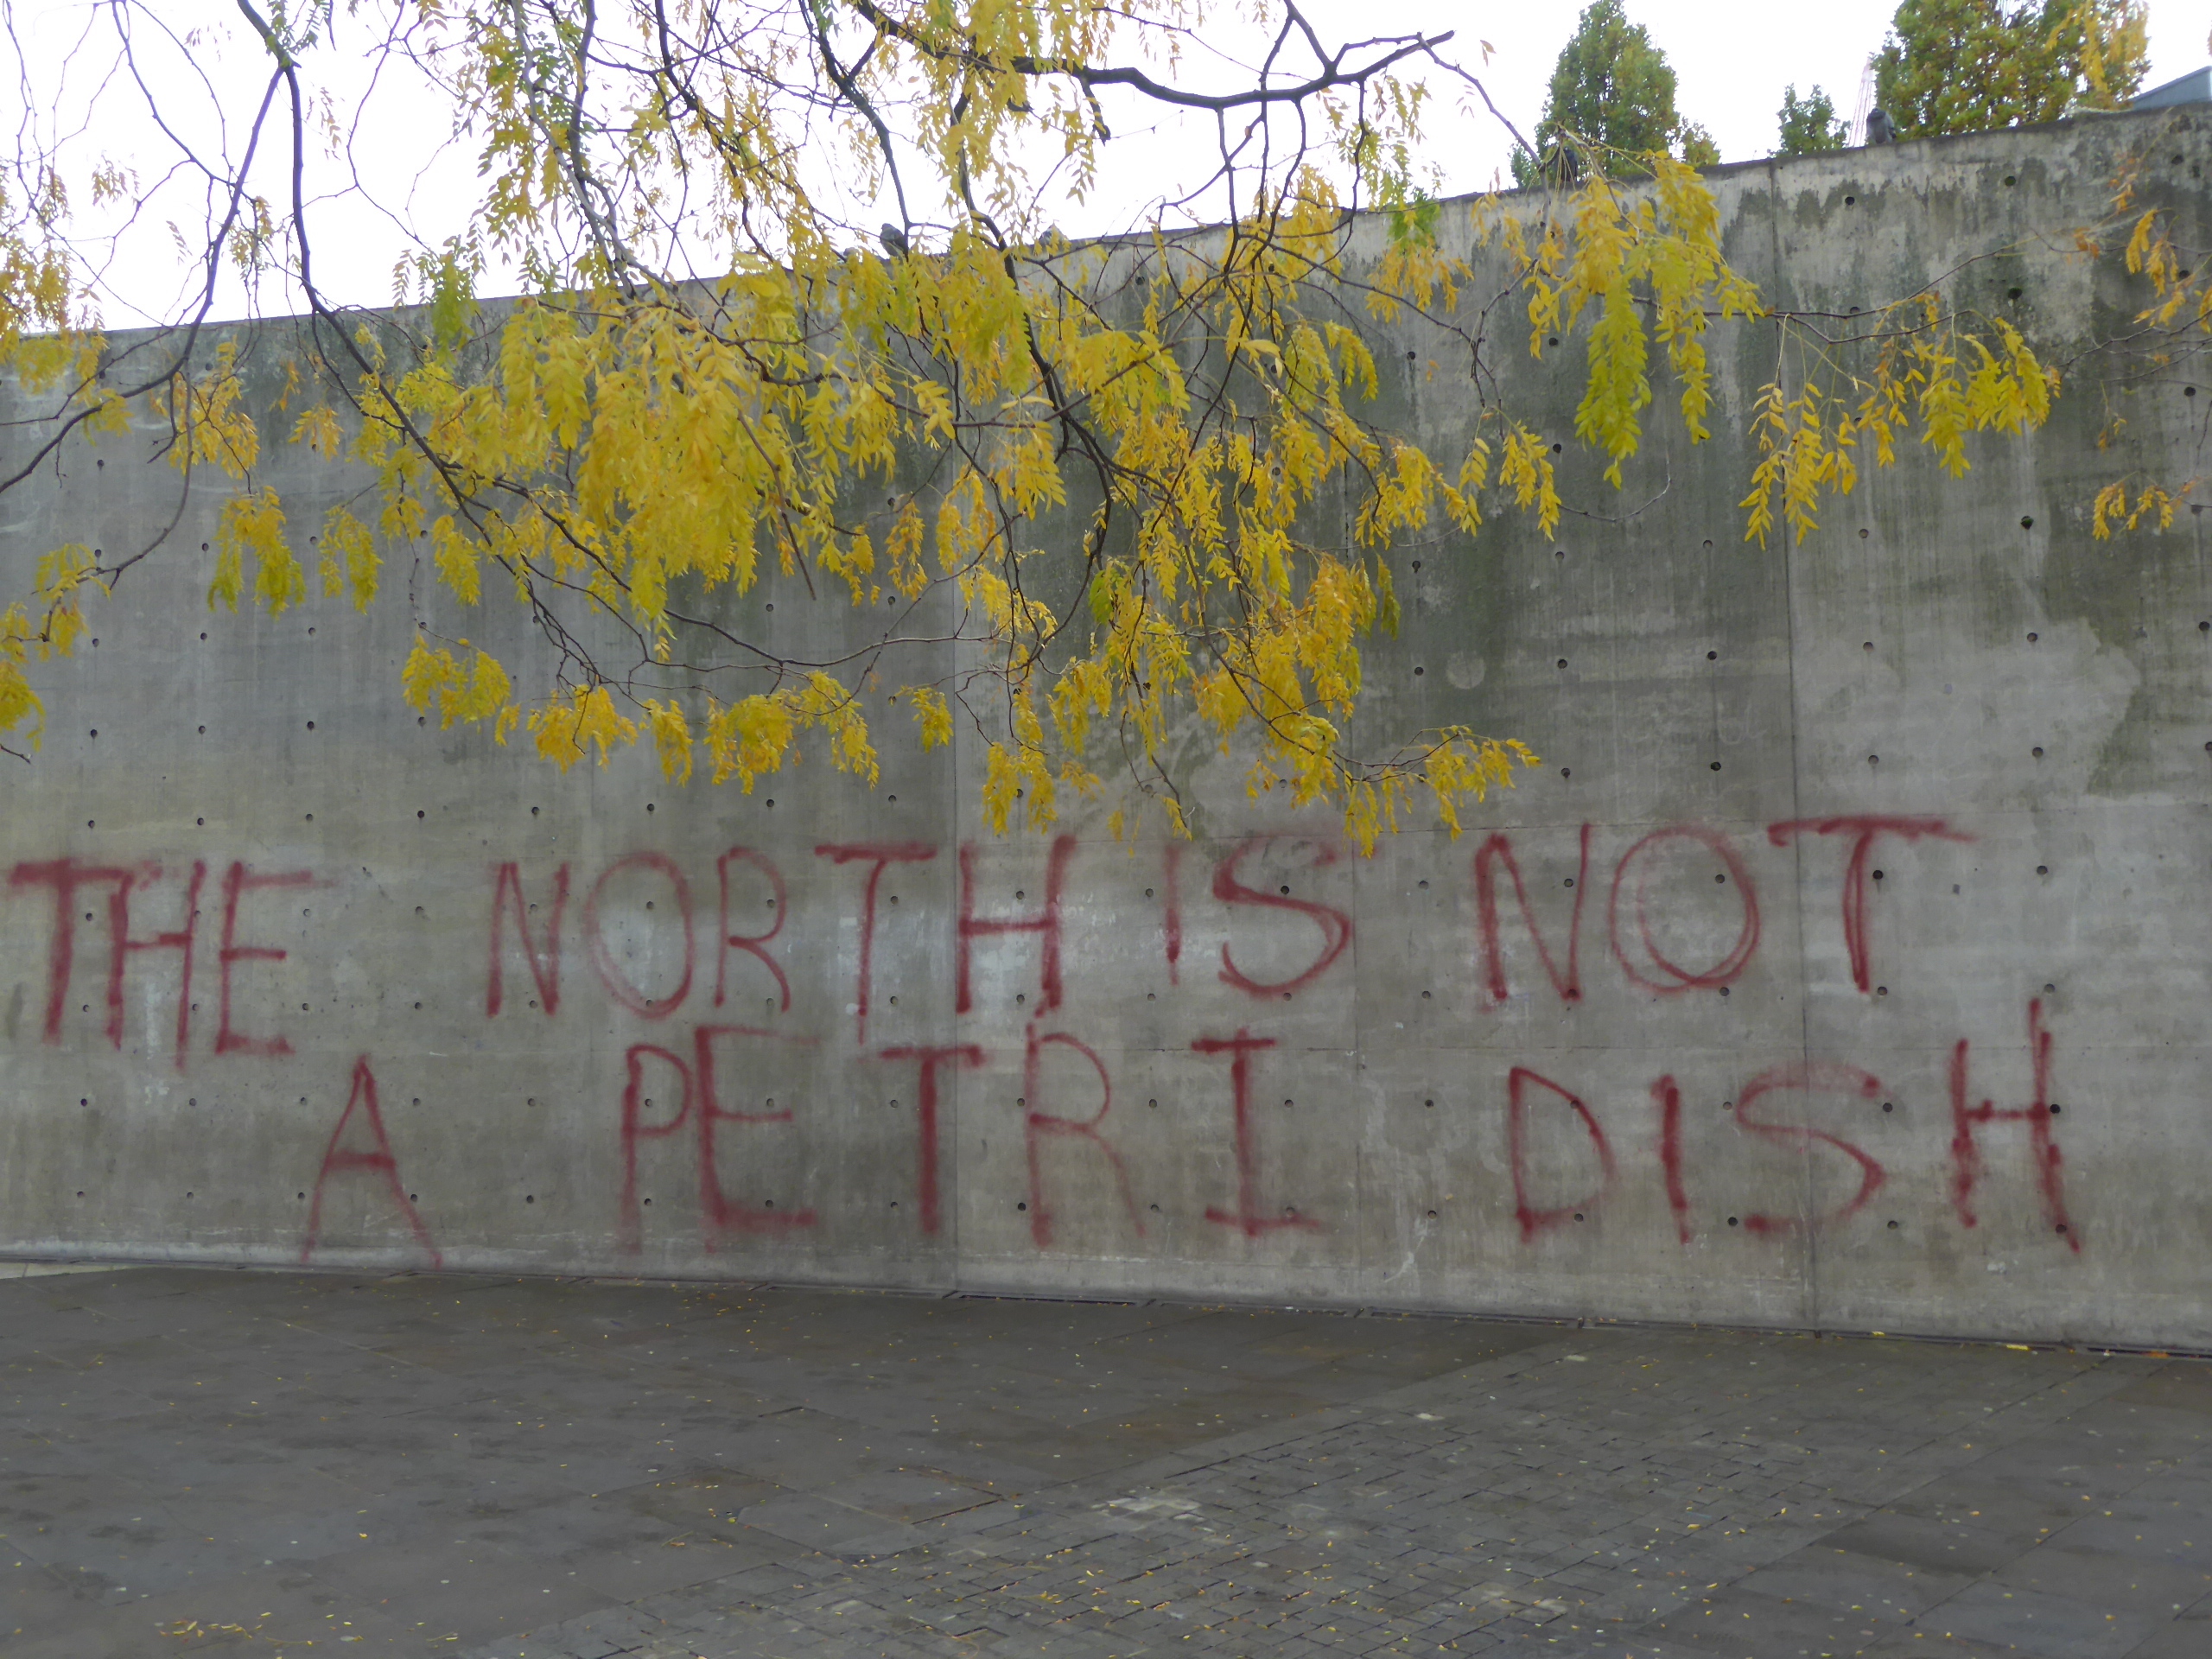 graffiti on a concrete wall